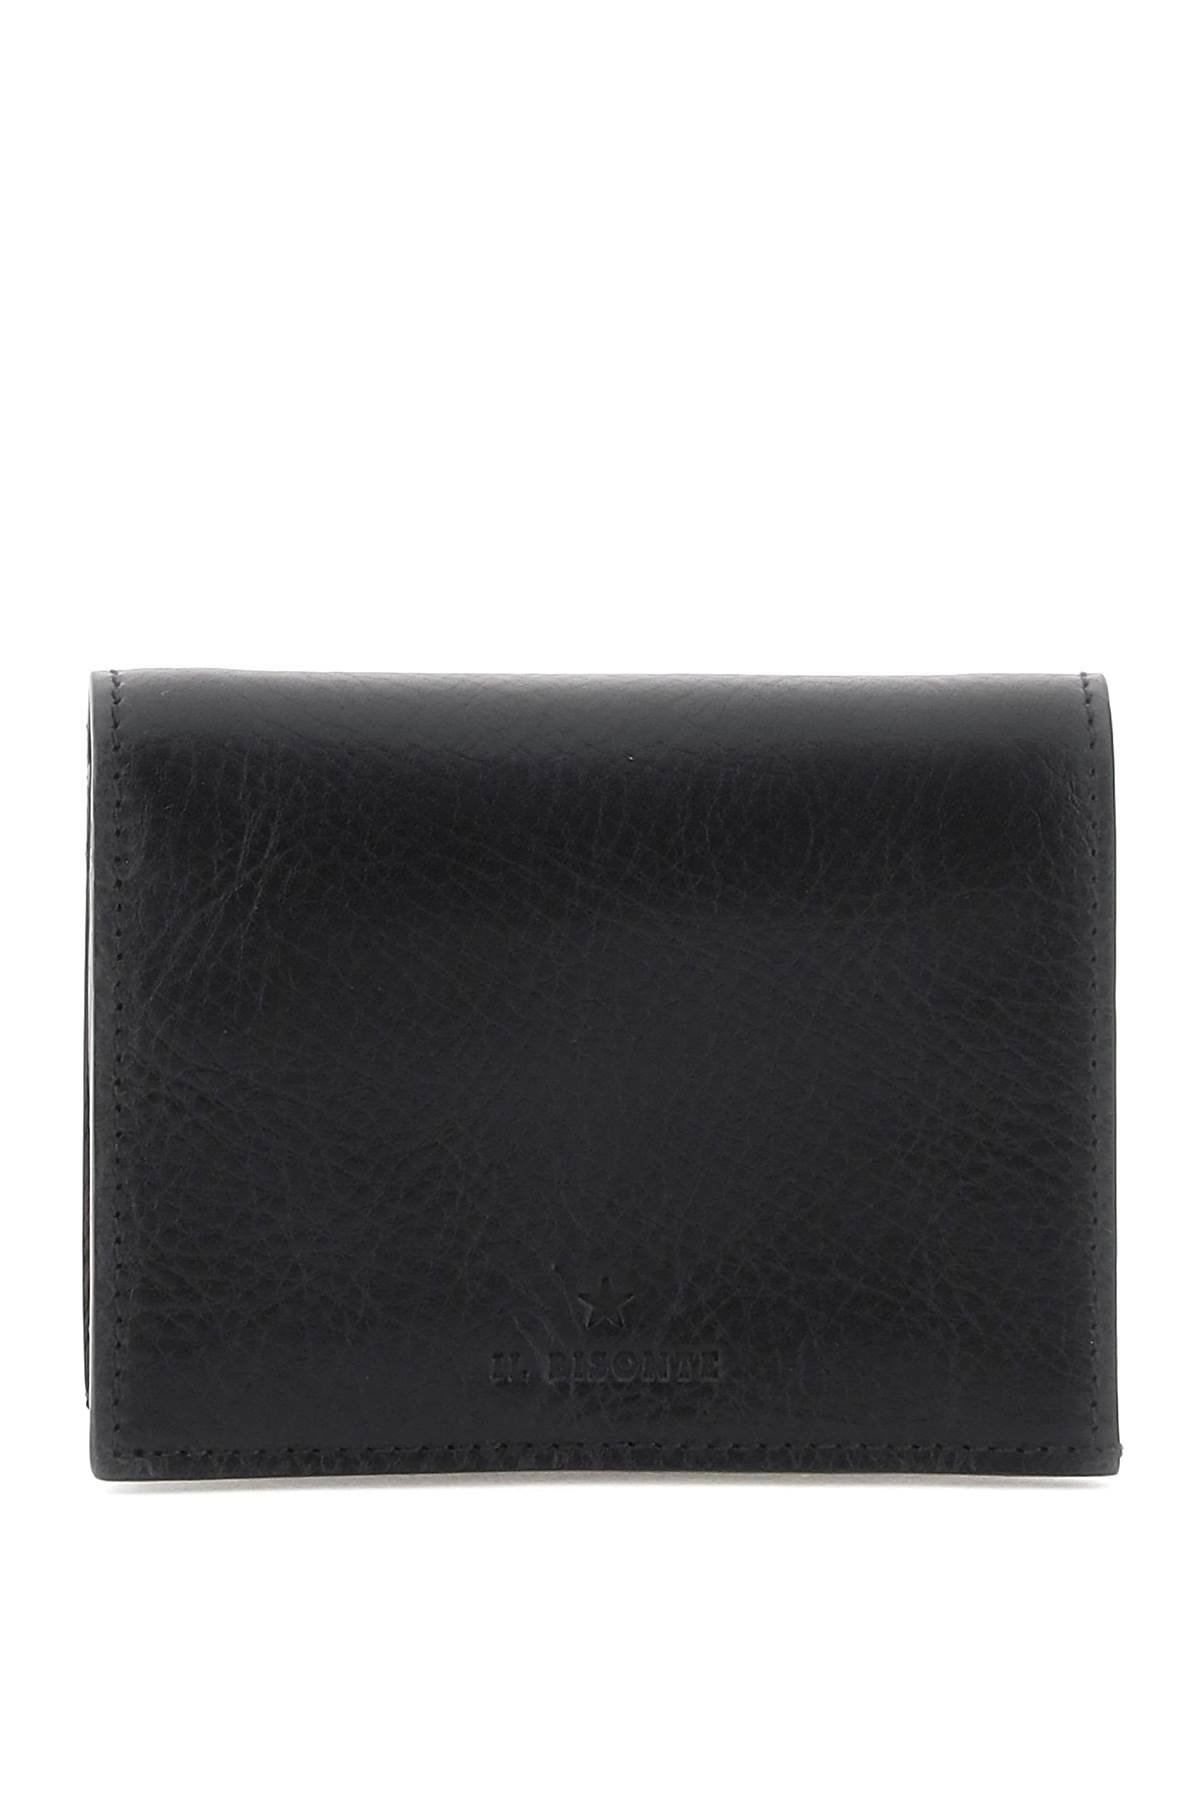 Il Bisonte IL BISONTE leather wallet